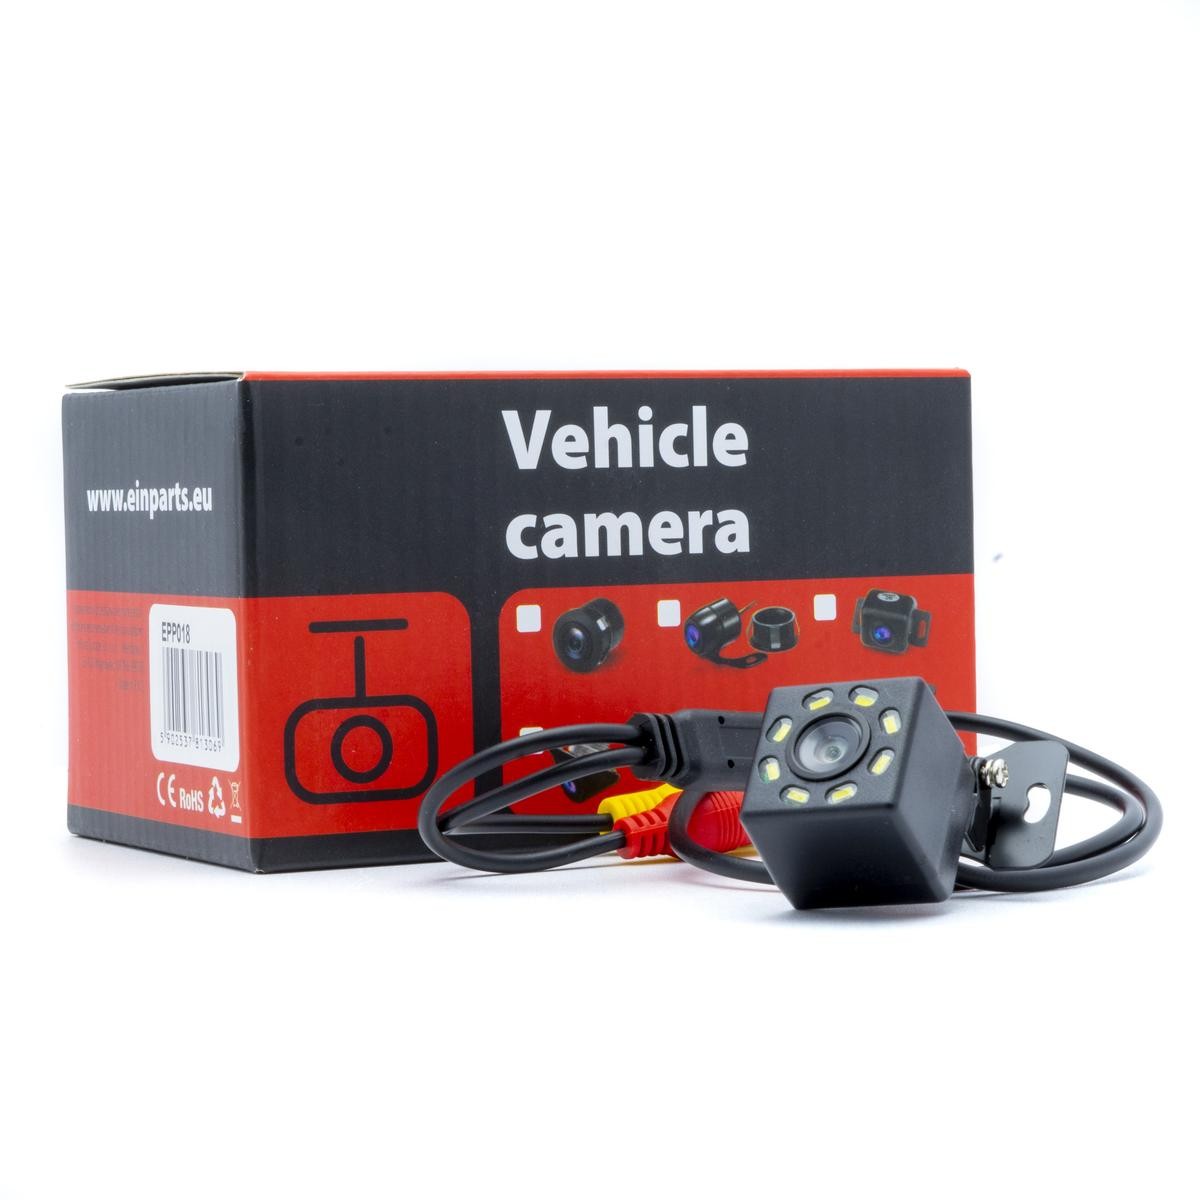 EINPARTS Reversing camera  EPP018 Reverse camera,Rear view camera,Backup camera,Rear parking camera,Reverse parking camera